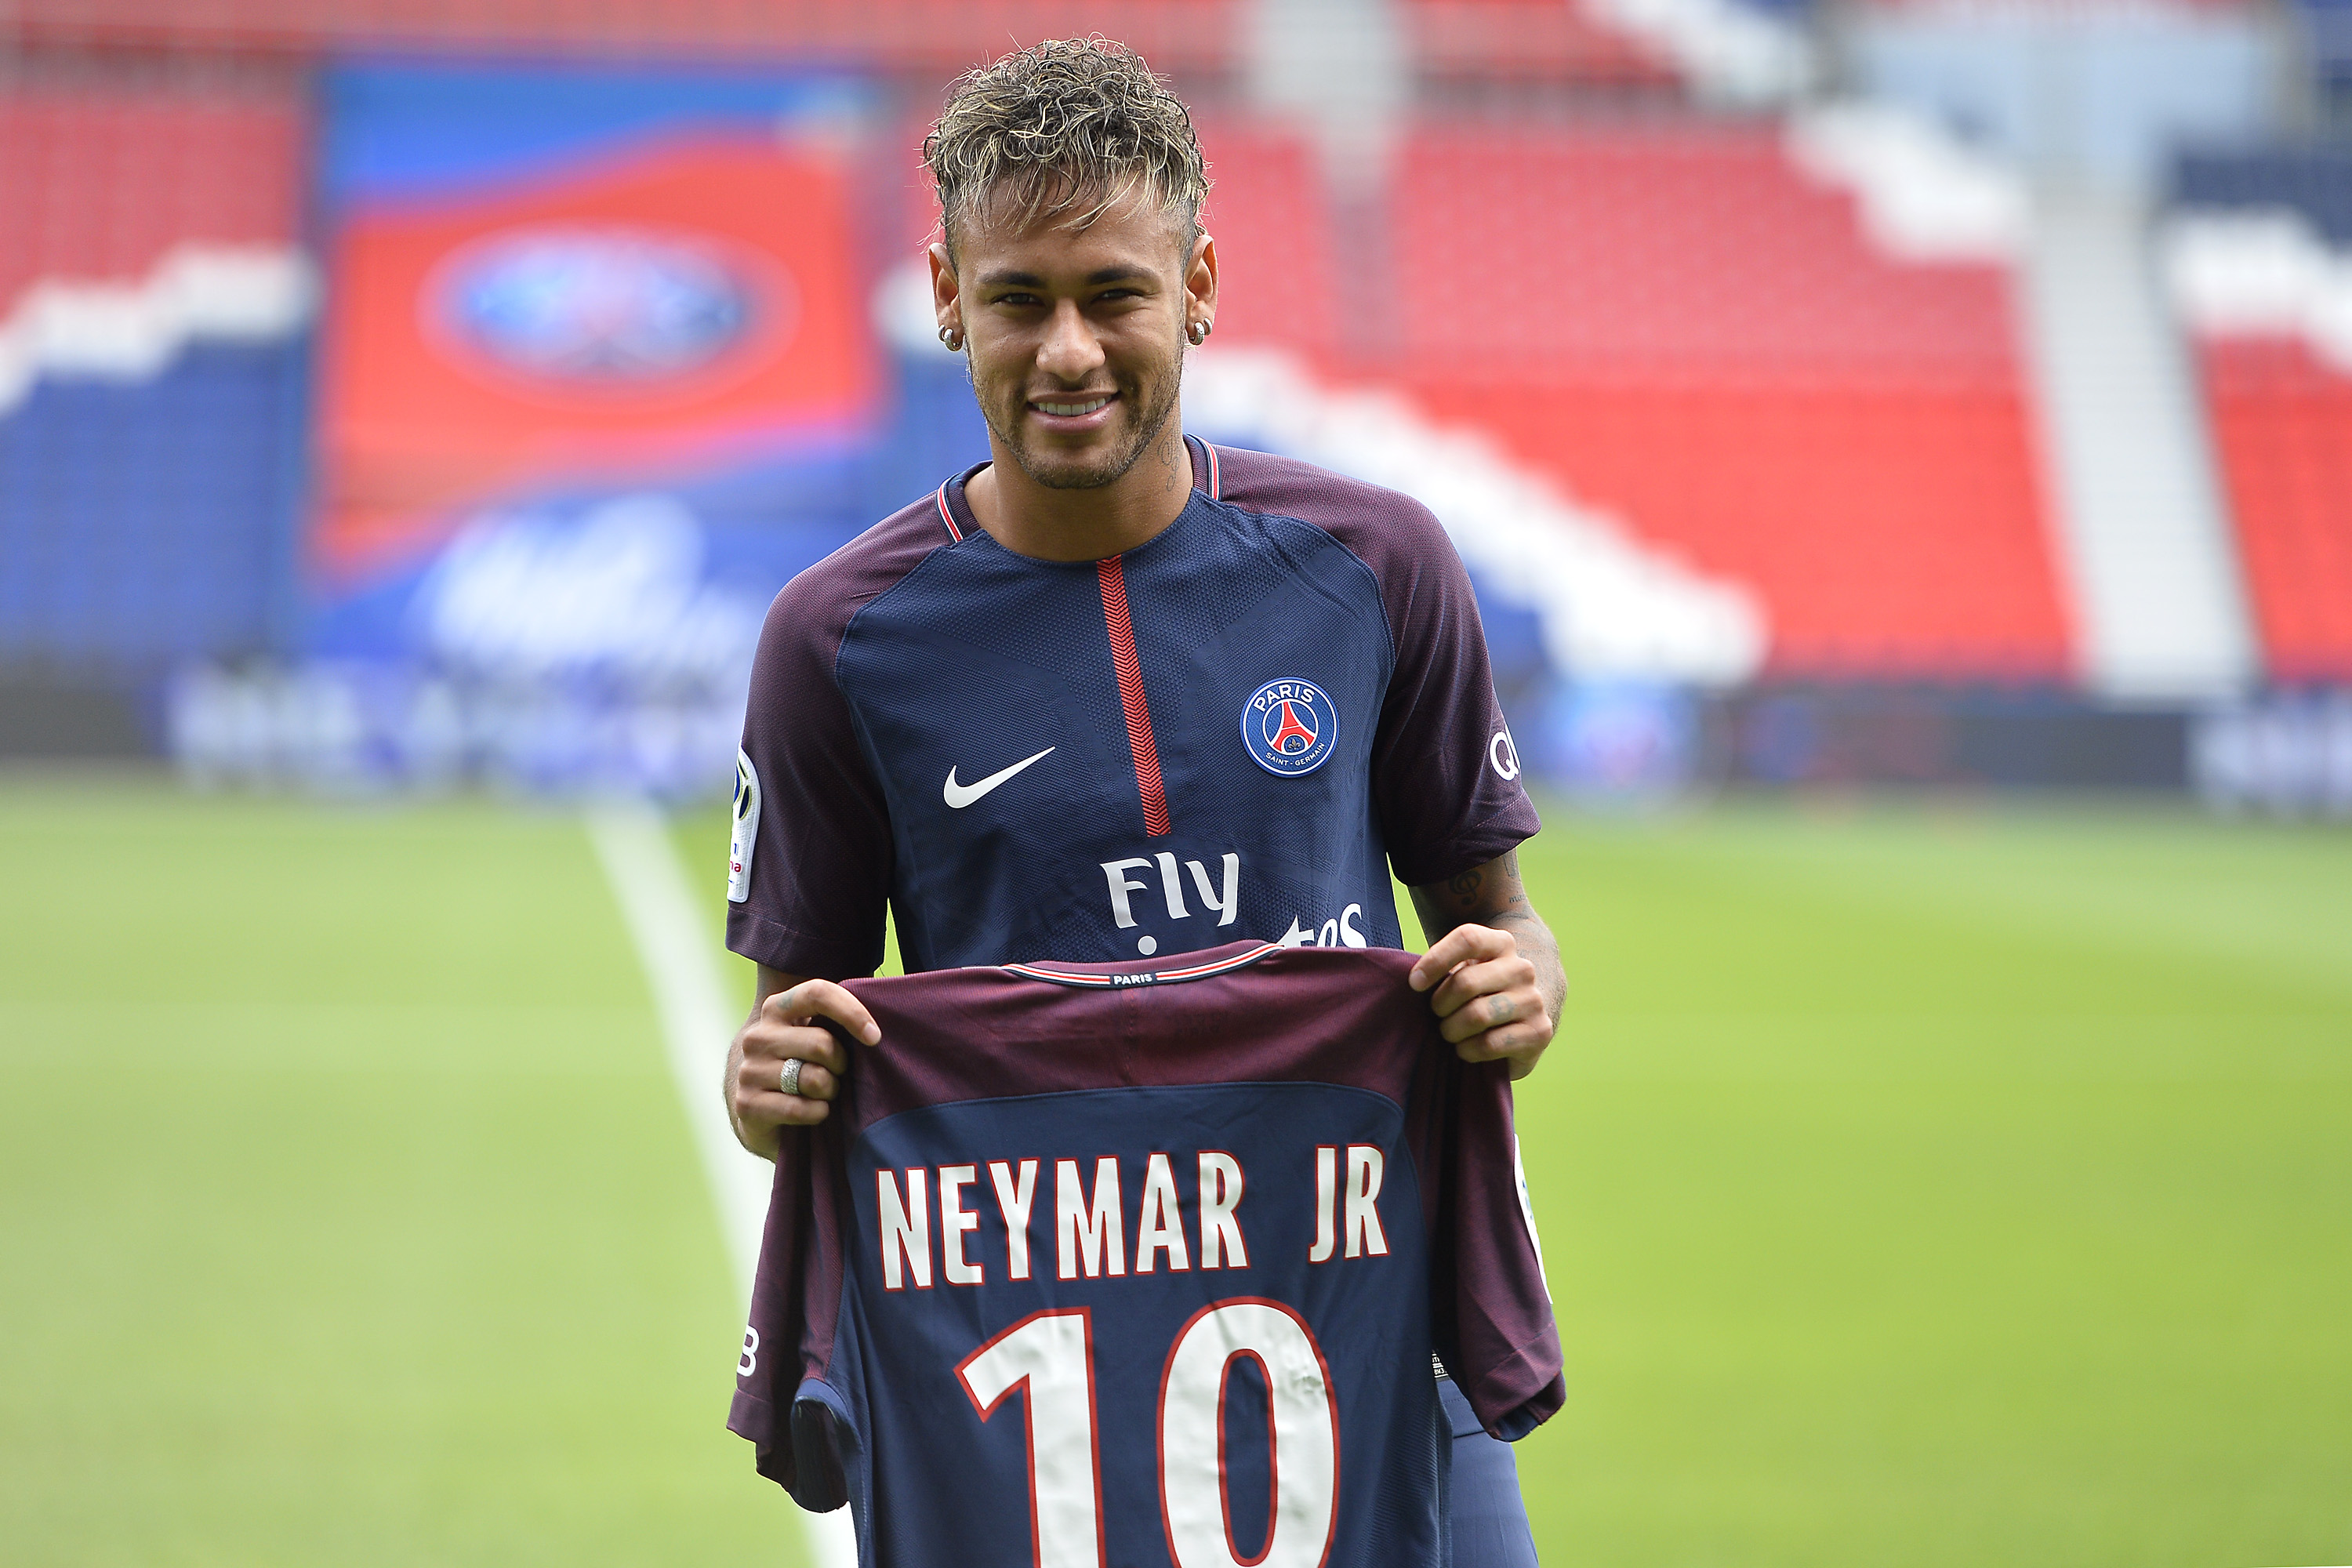 Neymar PSG 222 millones de euros